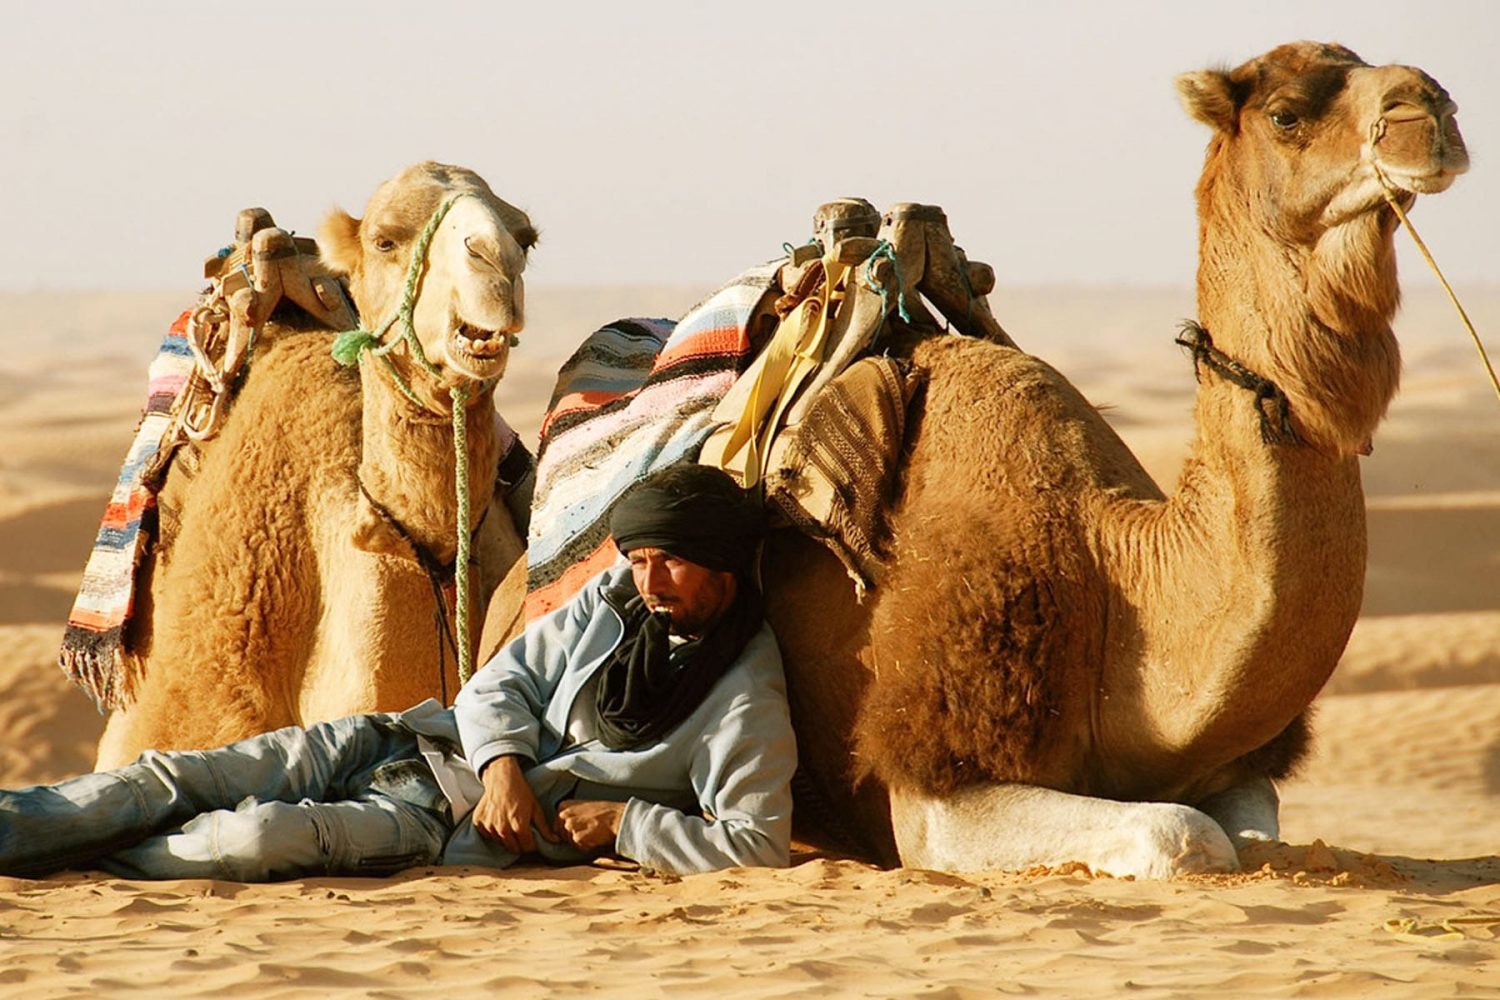 Sahara Desert Camel Trekking in Tunisia